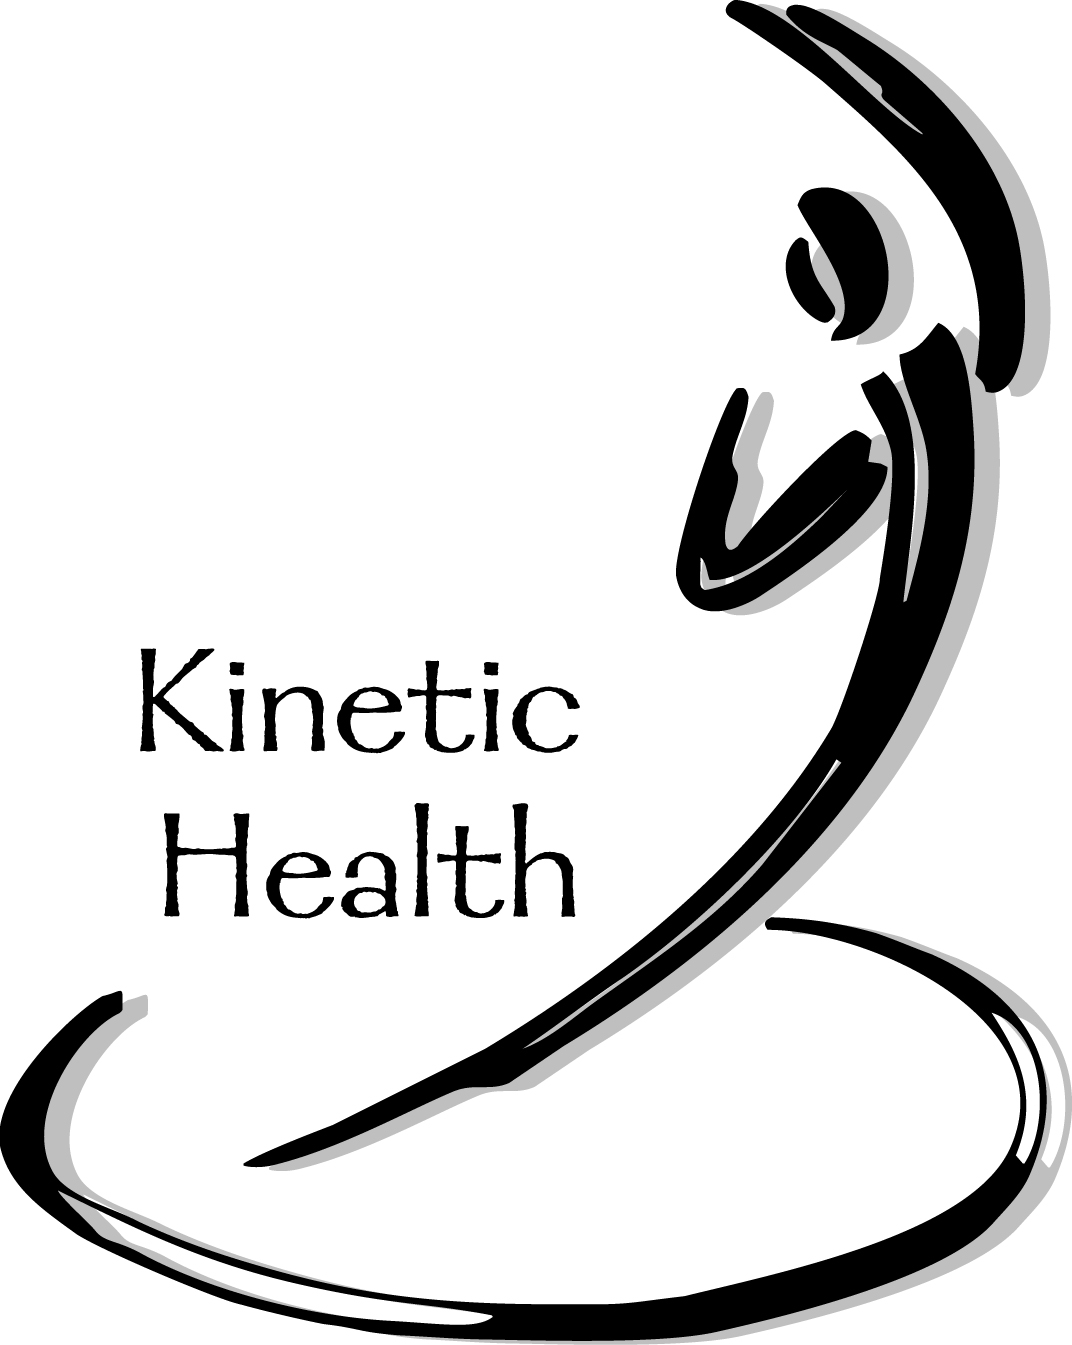 Kinetic Health